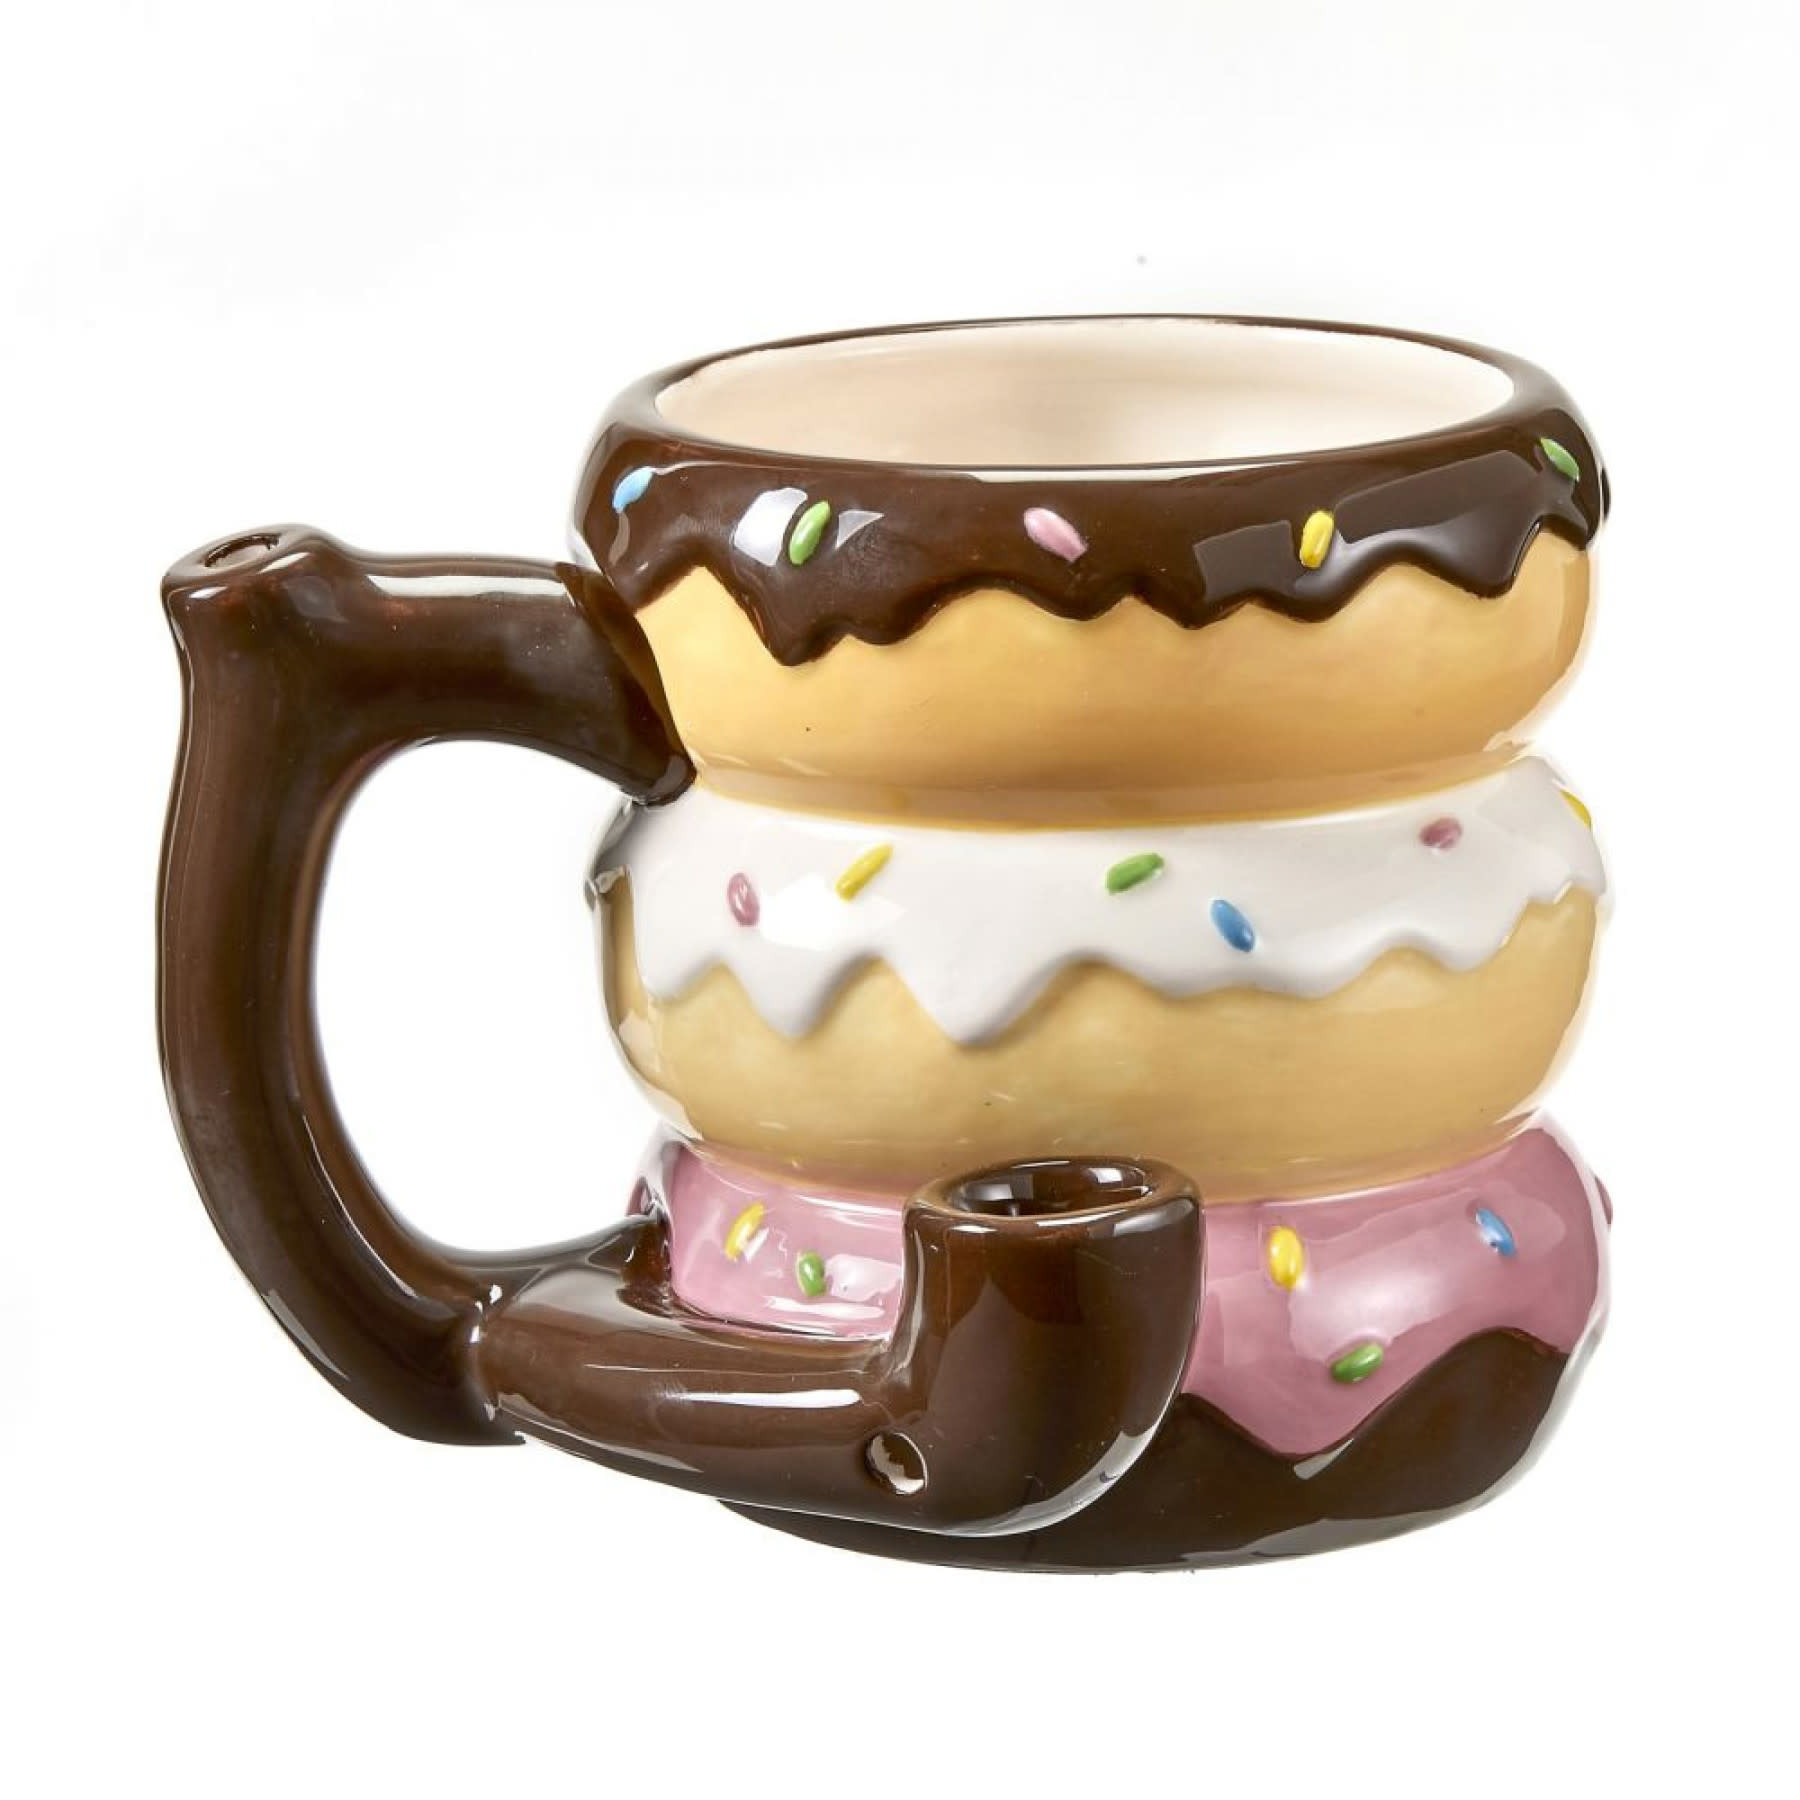 West Coast Gifts Ceramic Donut Mug Pipe